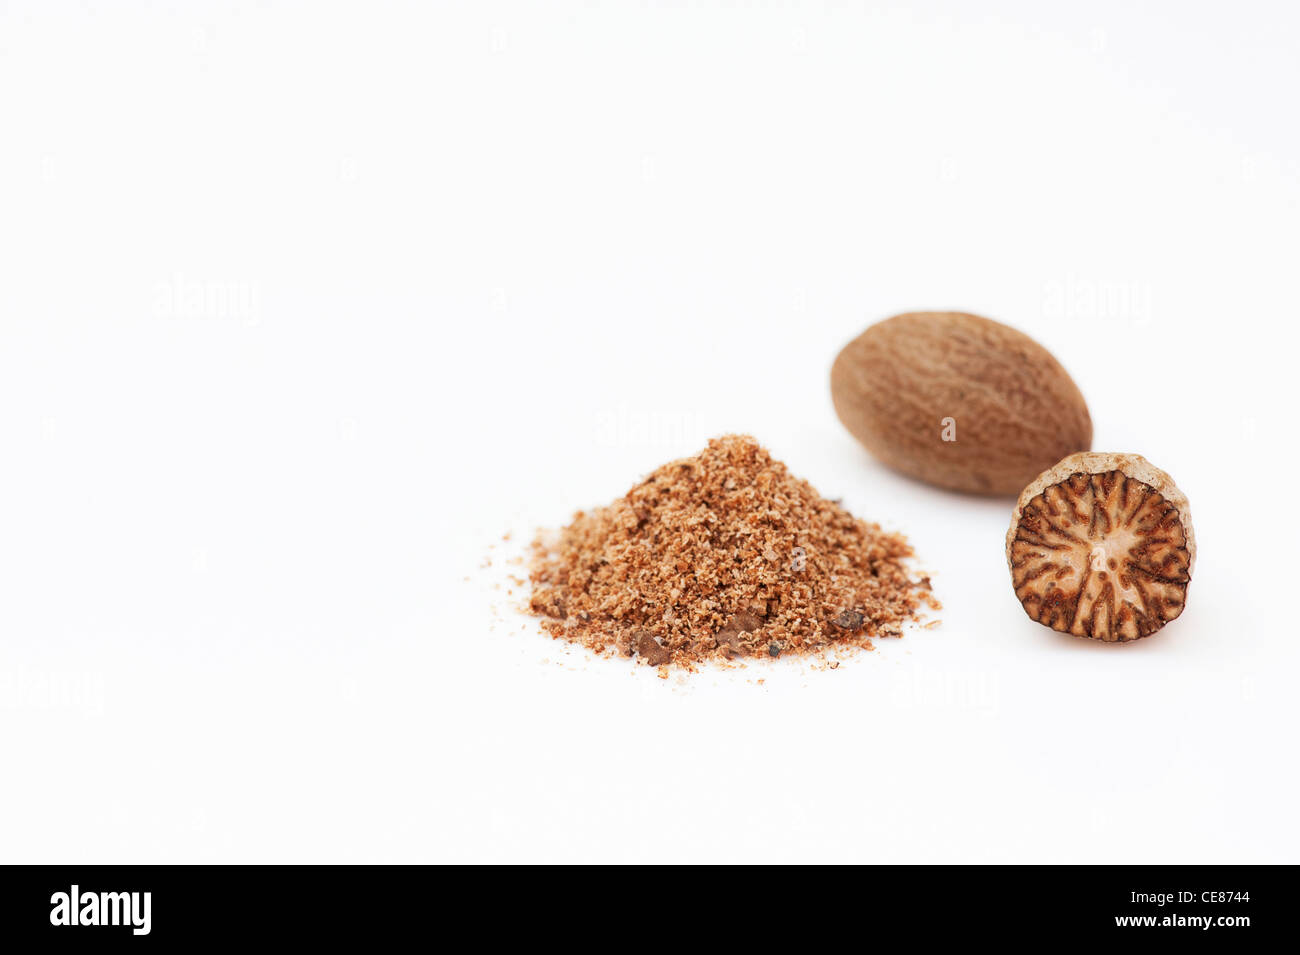 Myristica fragrans. Nutmeg and ground nutmeg on white background Stock Photo